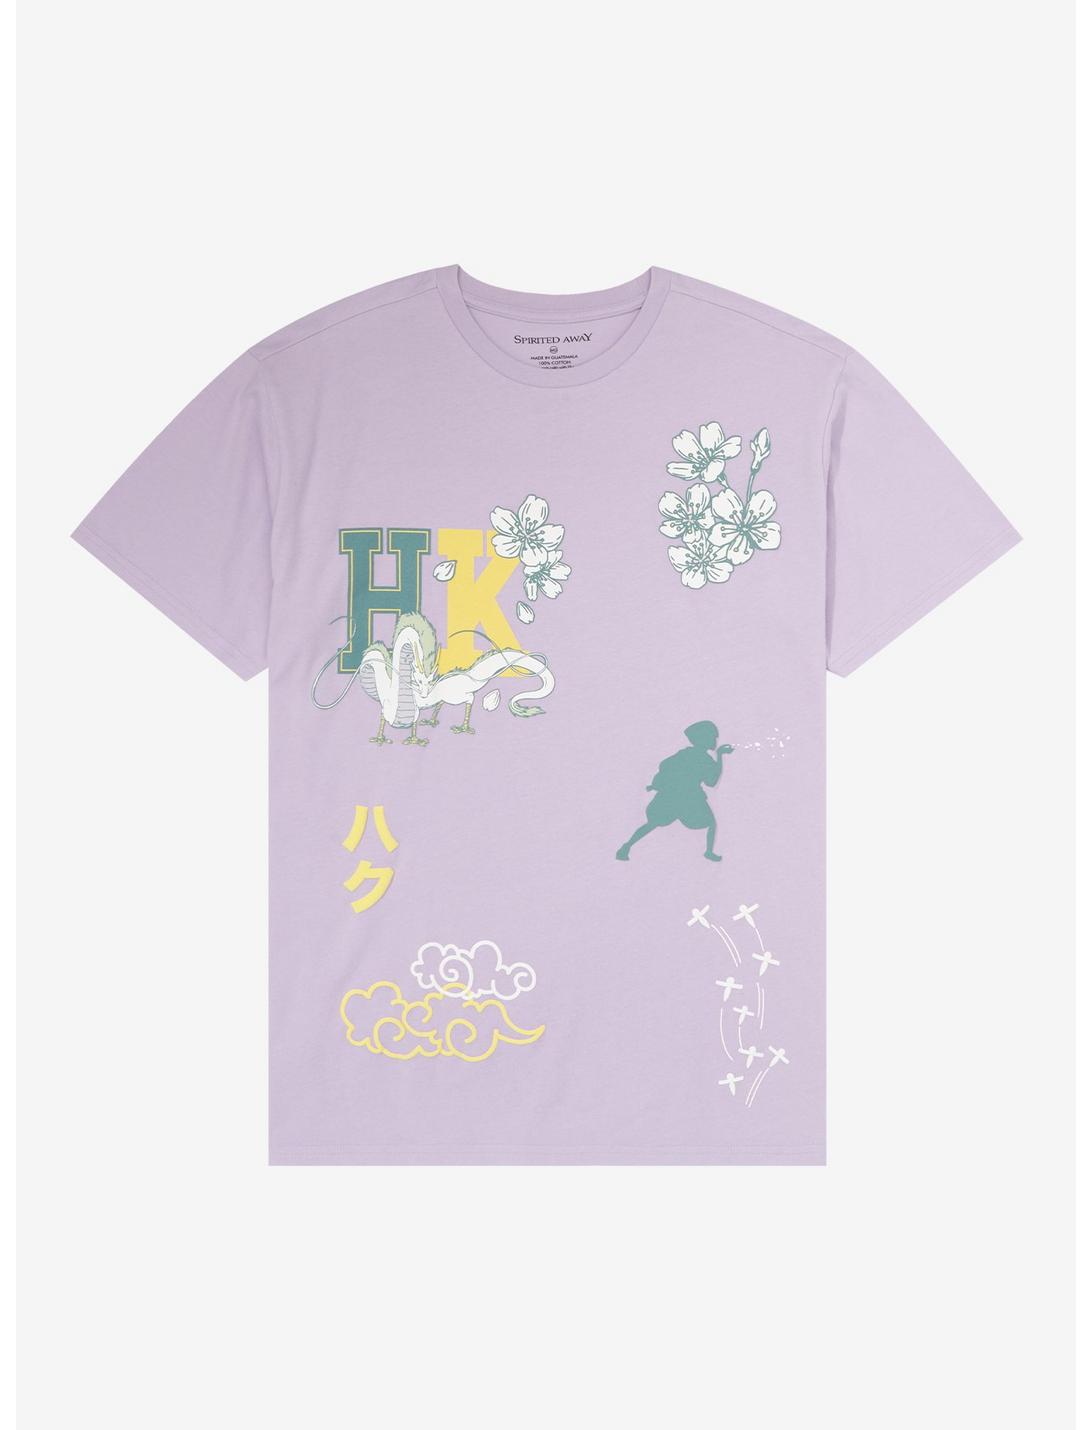 Studio Ghibli Spirited Away Haku Icons T-Shirt, LIGHT PURPLE, hi-res